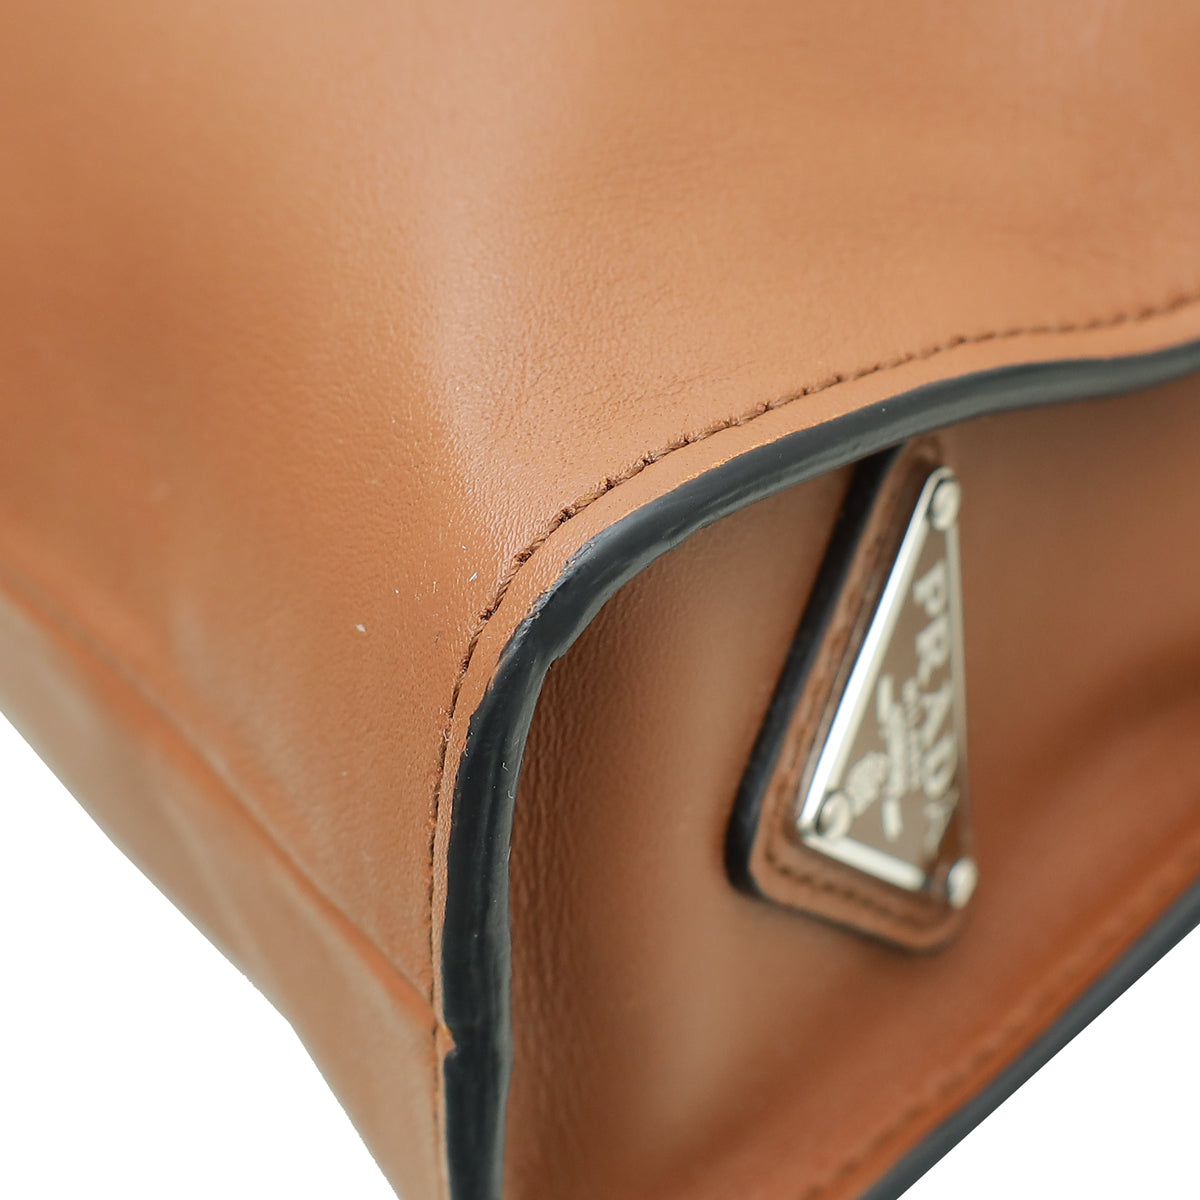 Prada Cognac Brown Triangle Logo Tote Bag